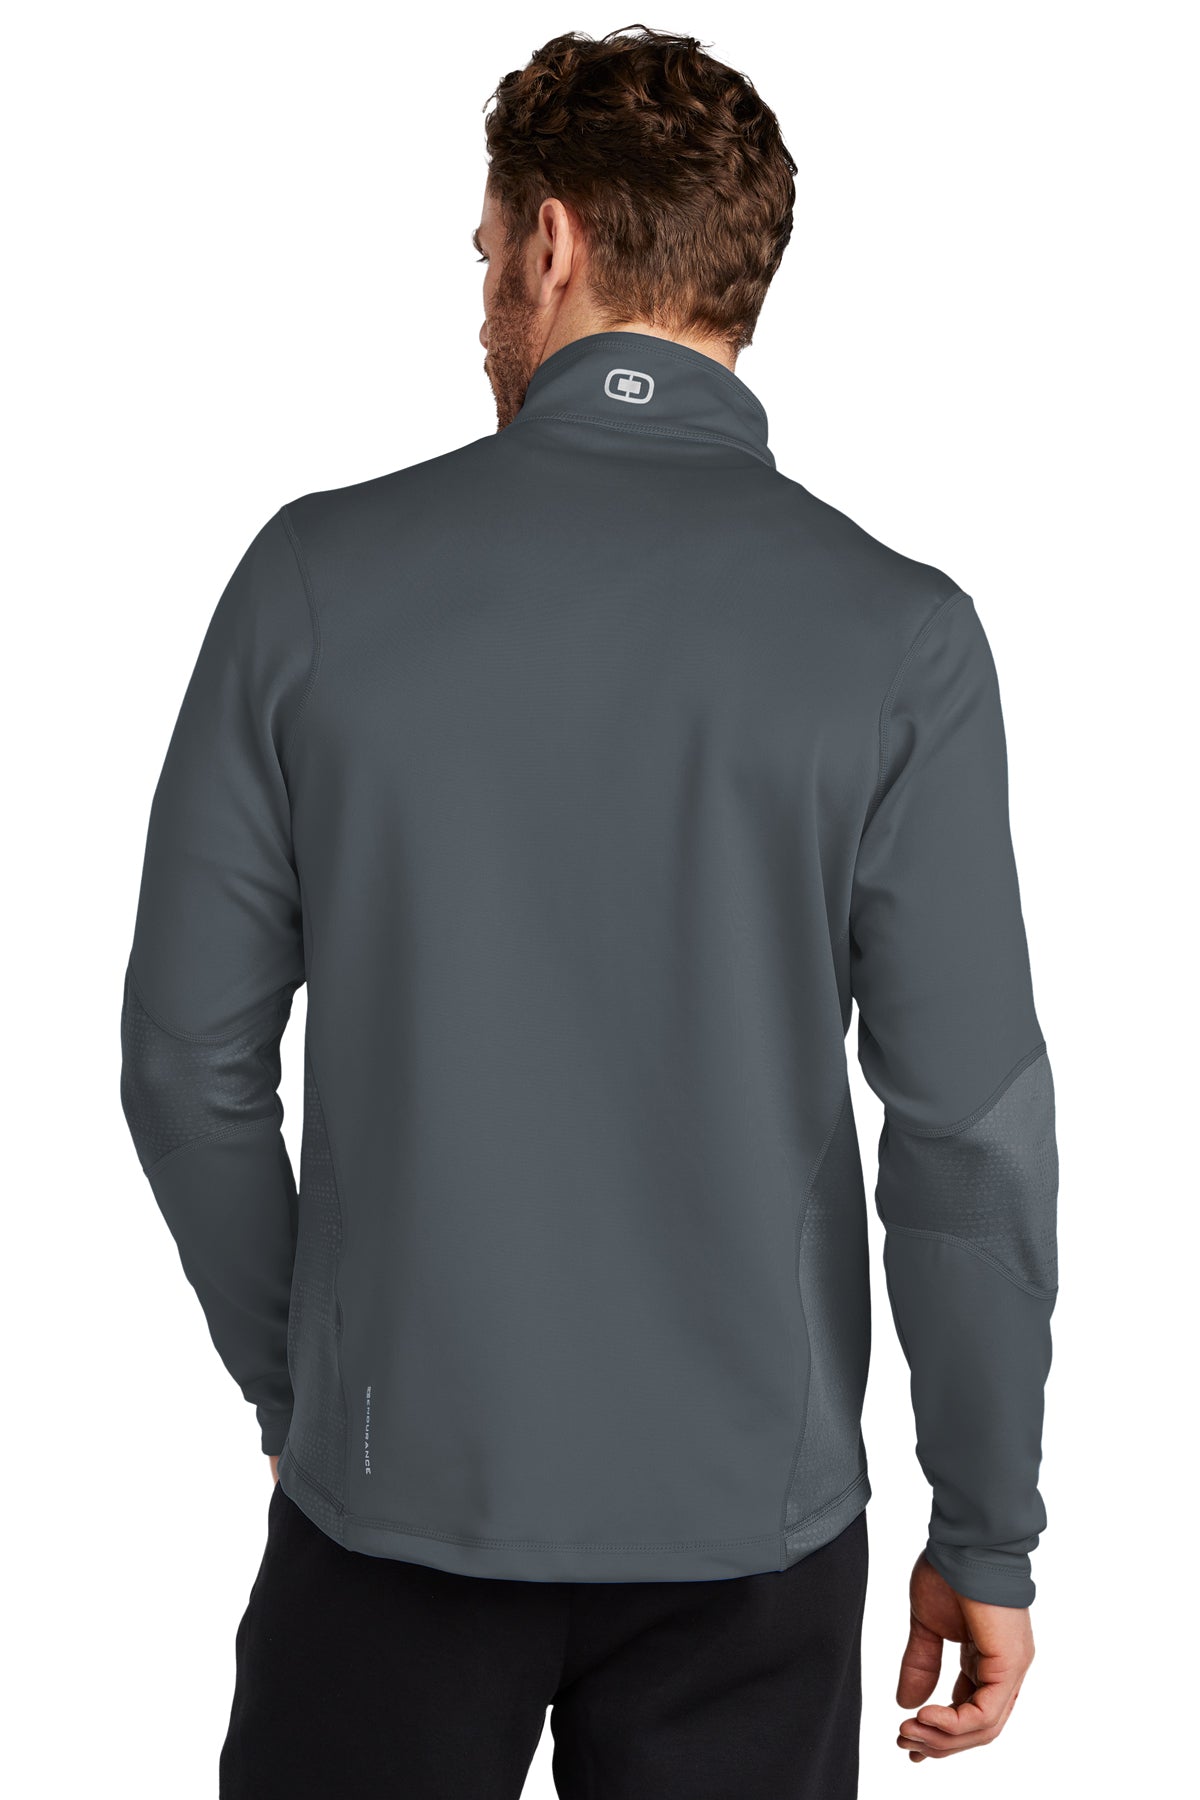 ogio endurance_oe701 _gear grey_company_logo_jackets